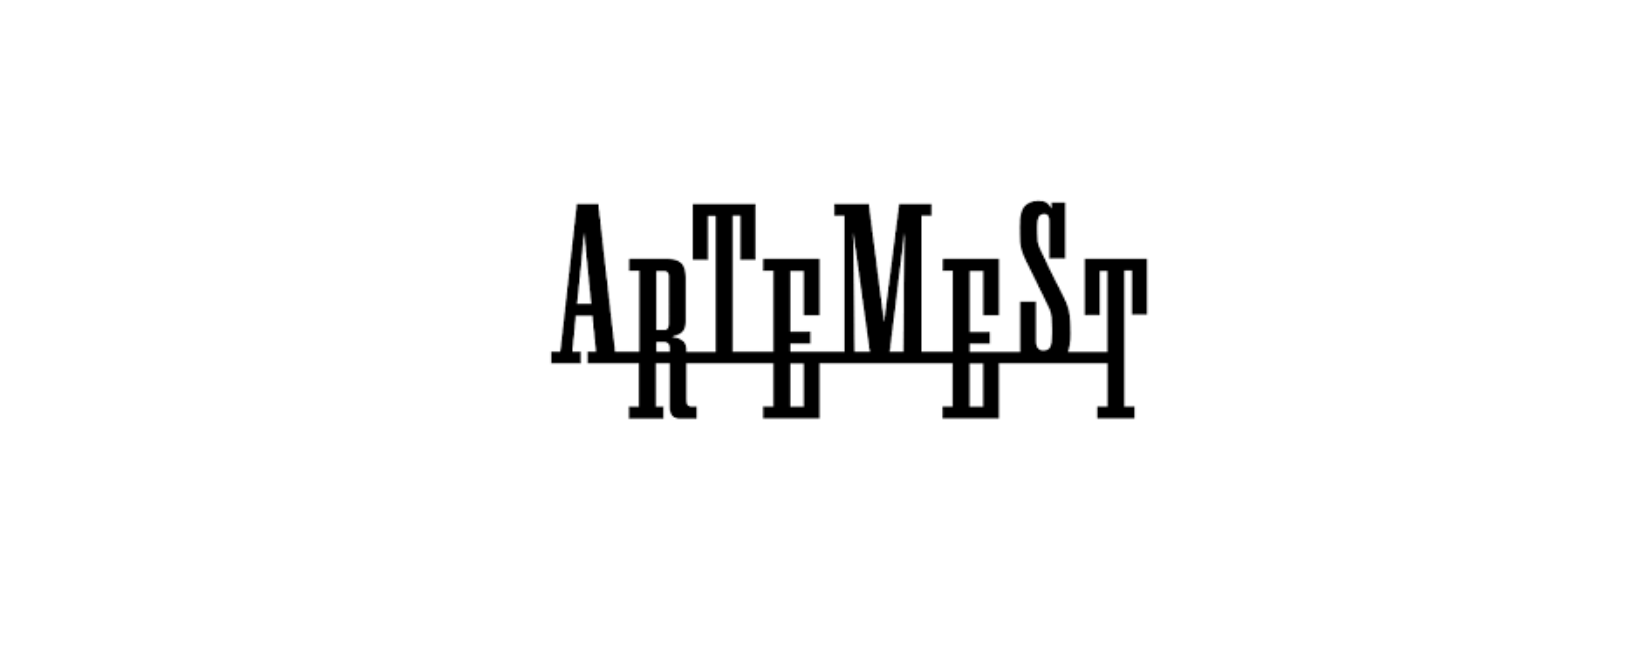 Artemest Discount Code 2022